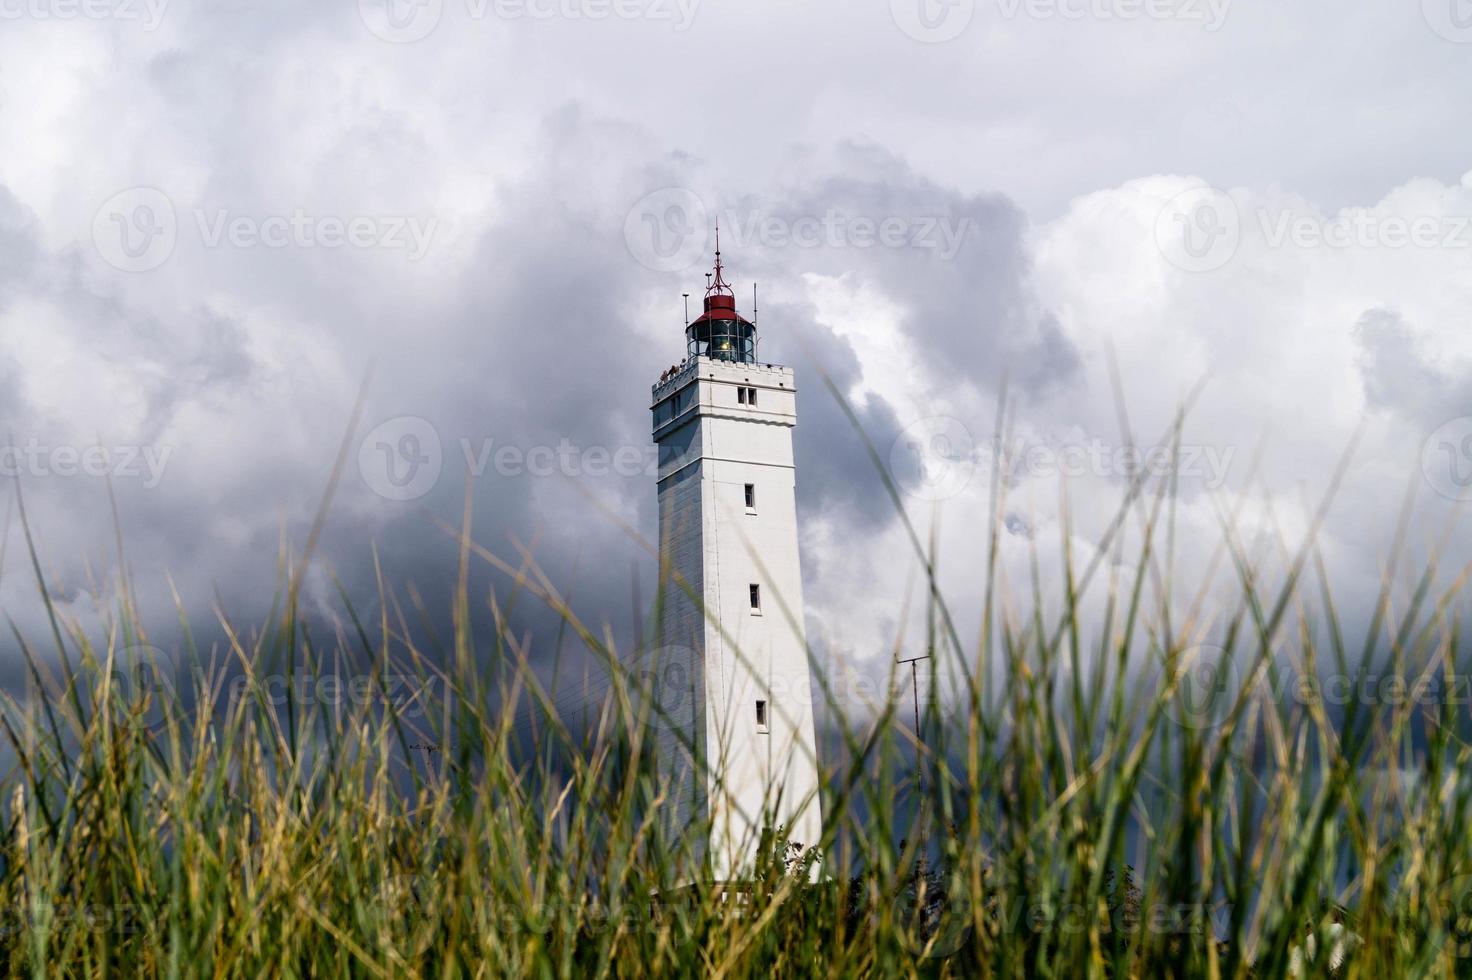 The Lighthouse Blavandshuk Fyr at the westcoast of Denmark photo